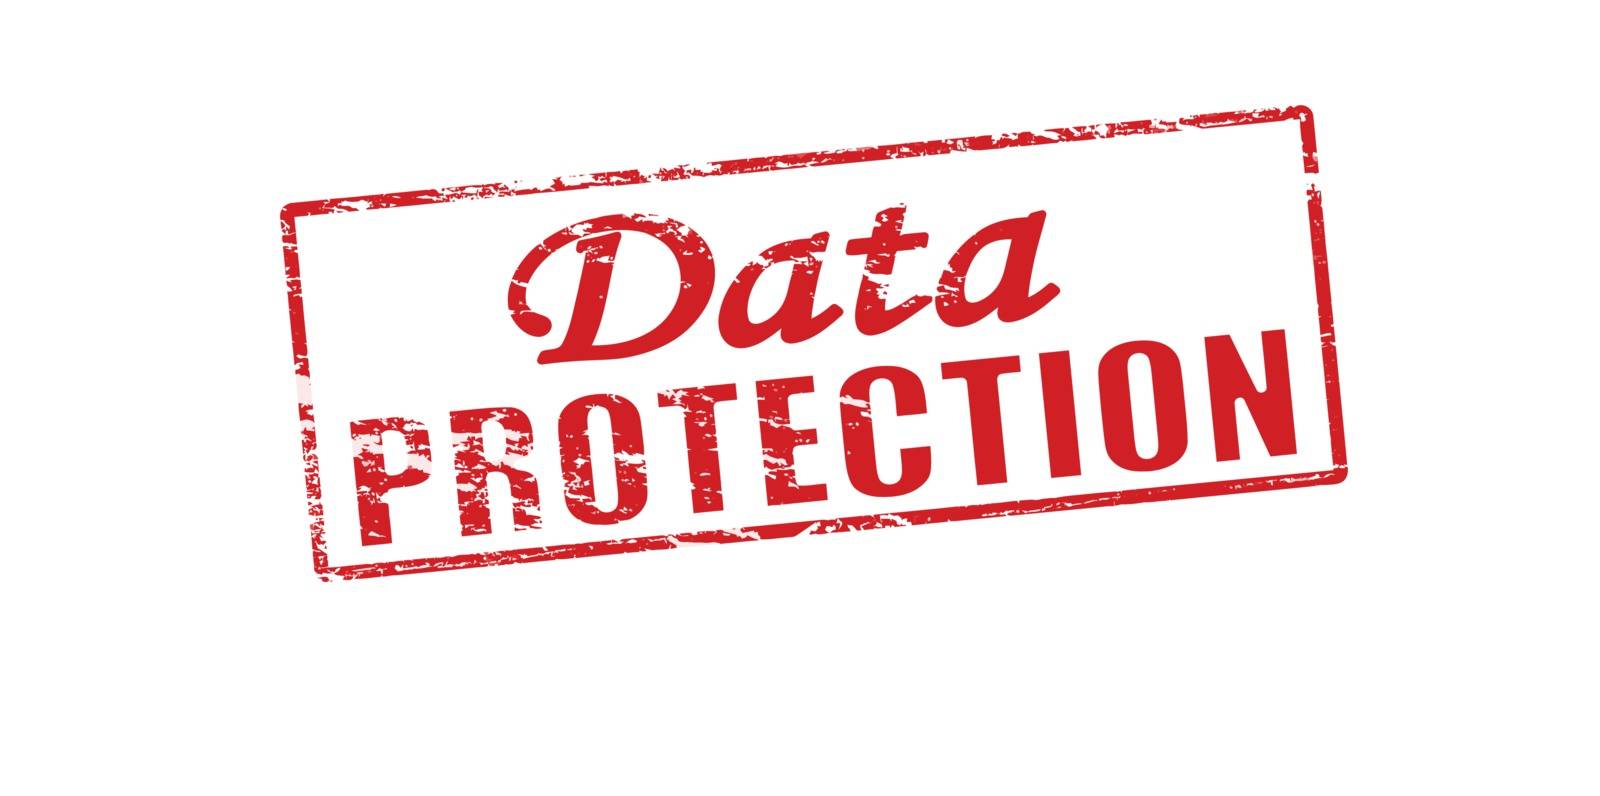 Data protection by carmenbobo